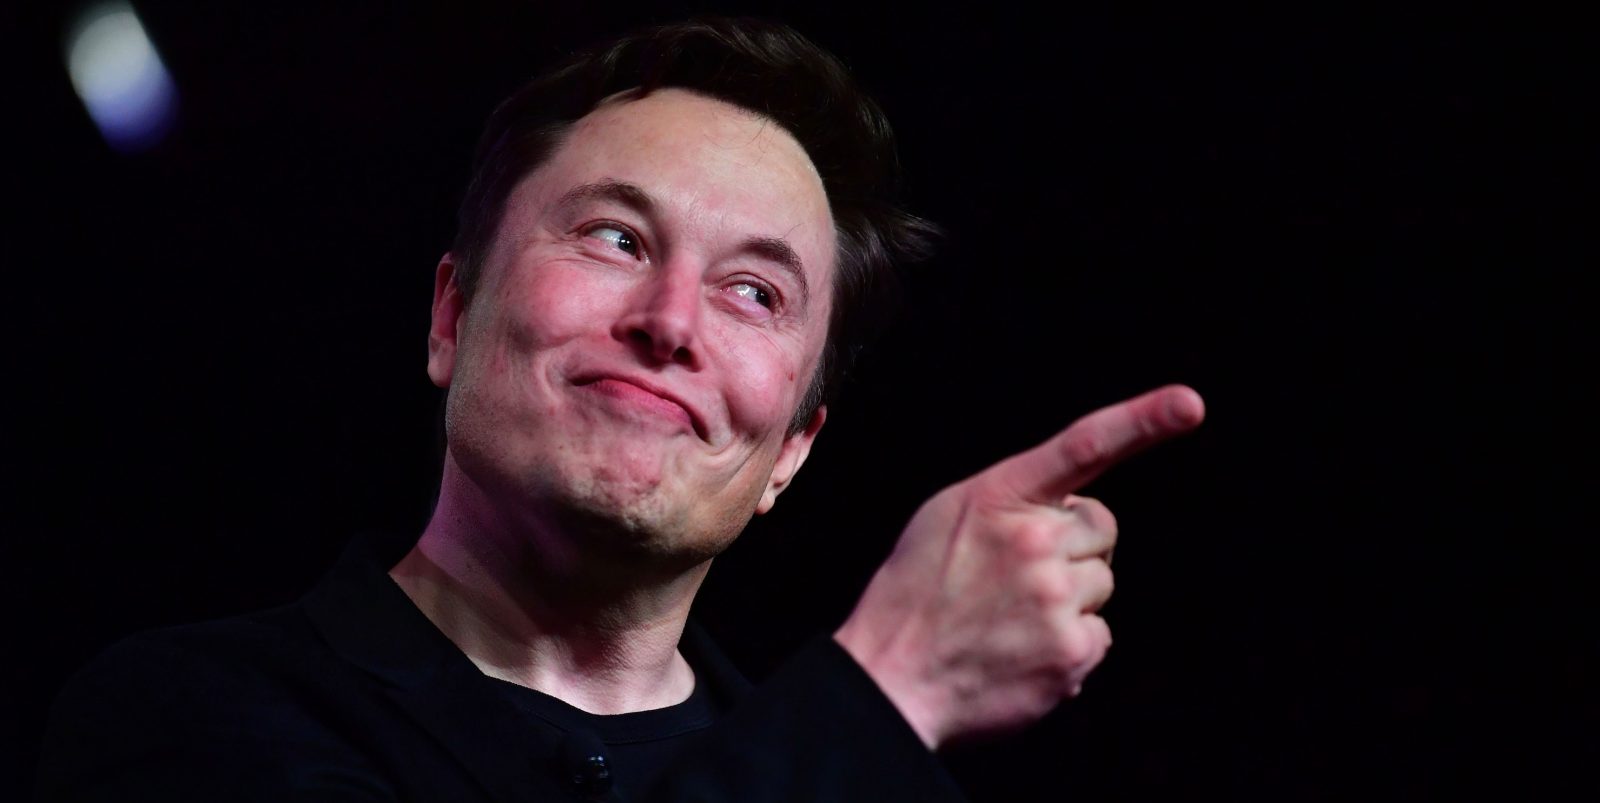 Elon Musk caio fischer UOD